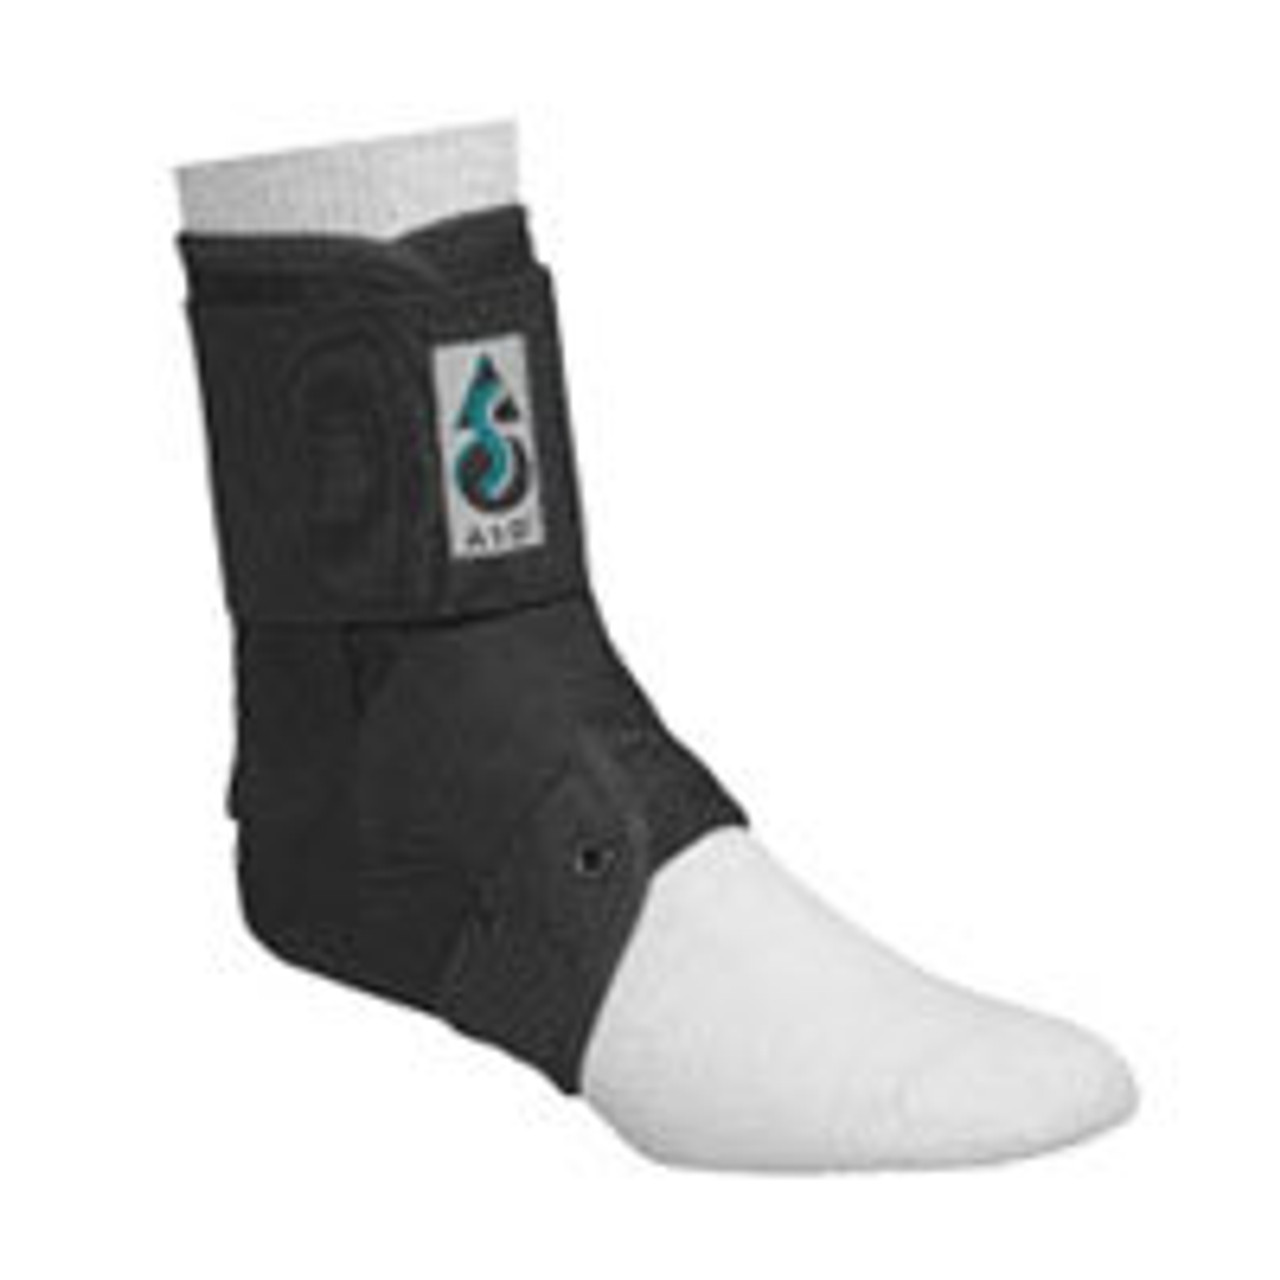 Ankle & Foot - Semi-Rigid Braces - MedStorz